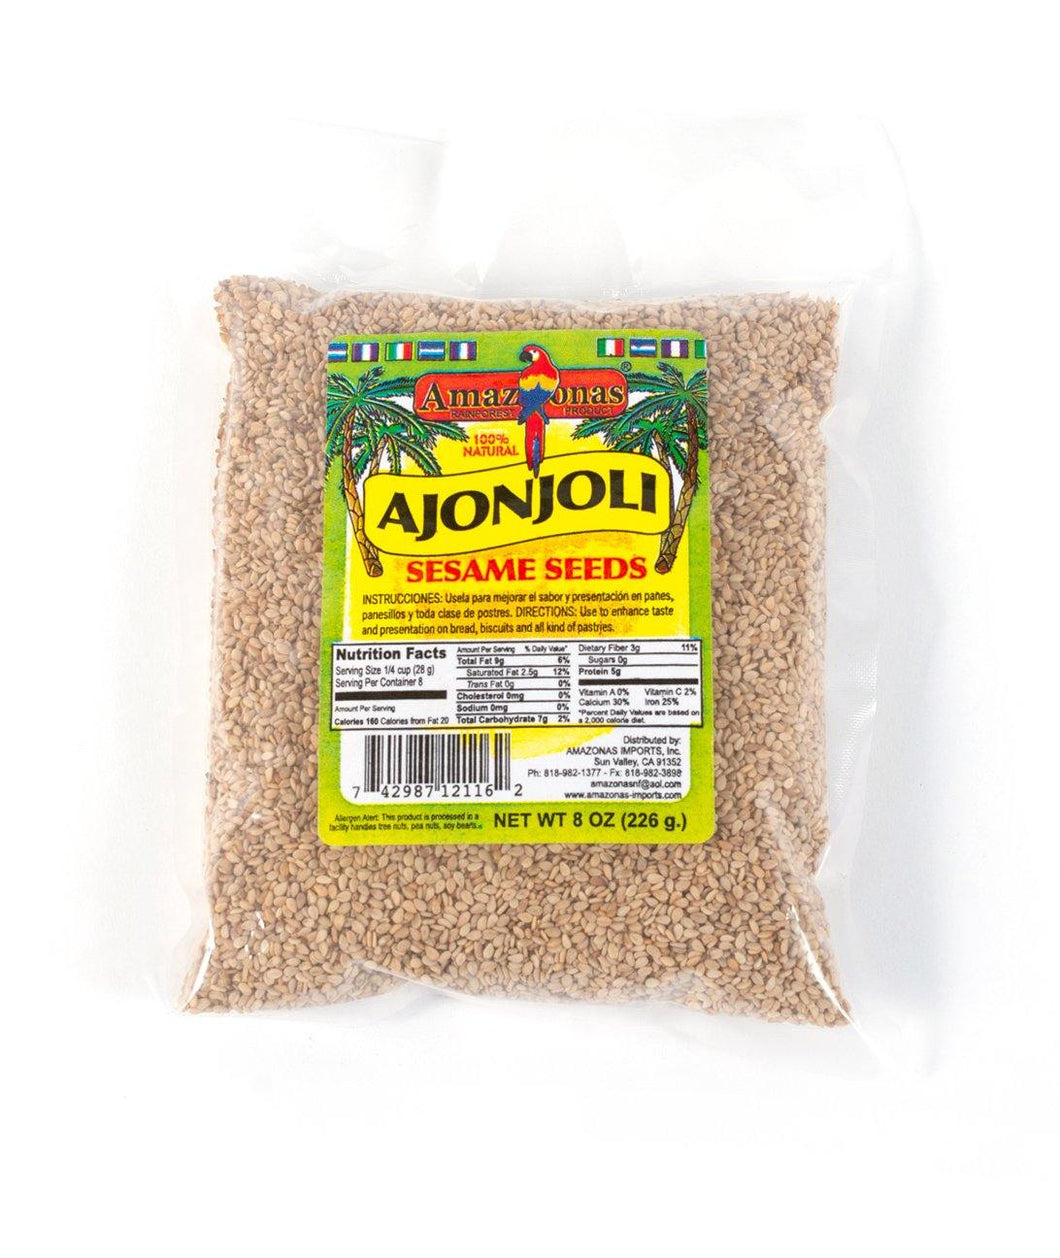 Amazonas Sesame seeds / Ajonjoli - Amazonas Foods Online